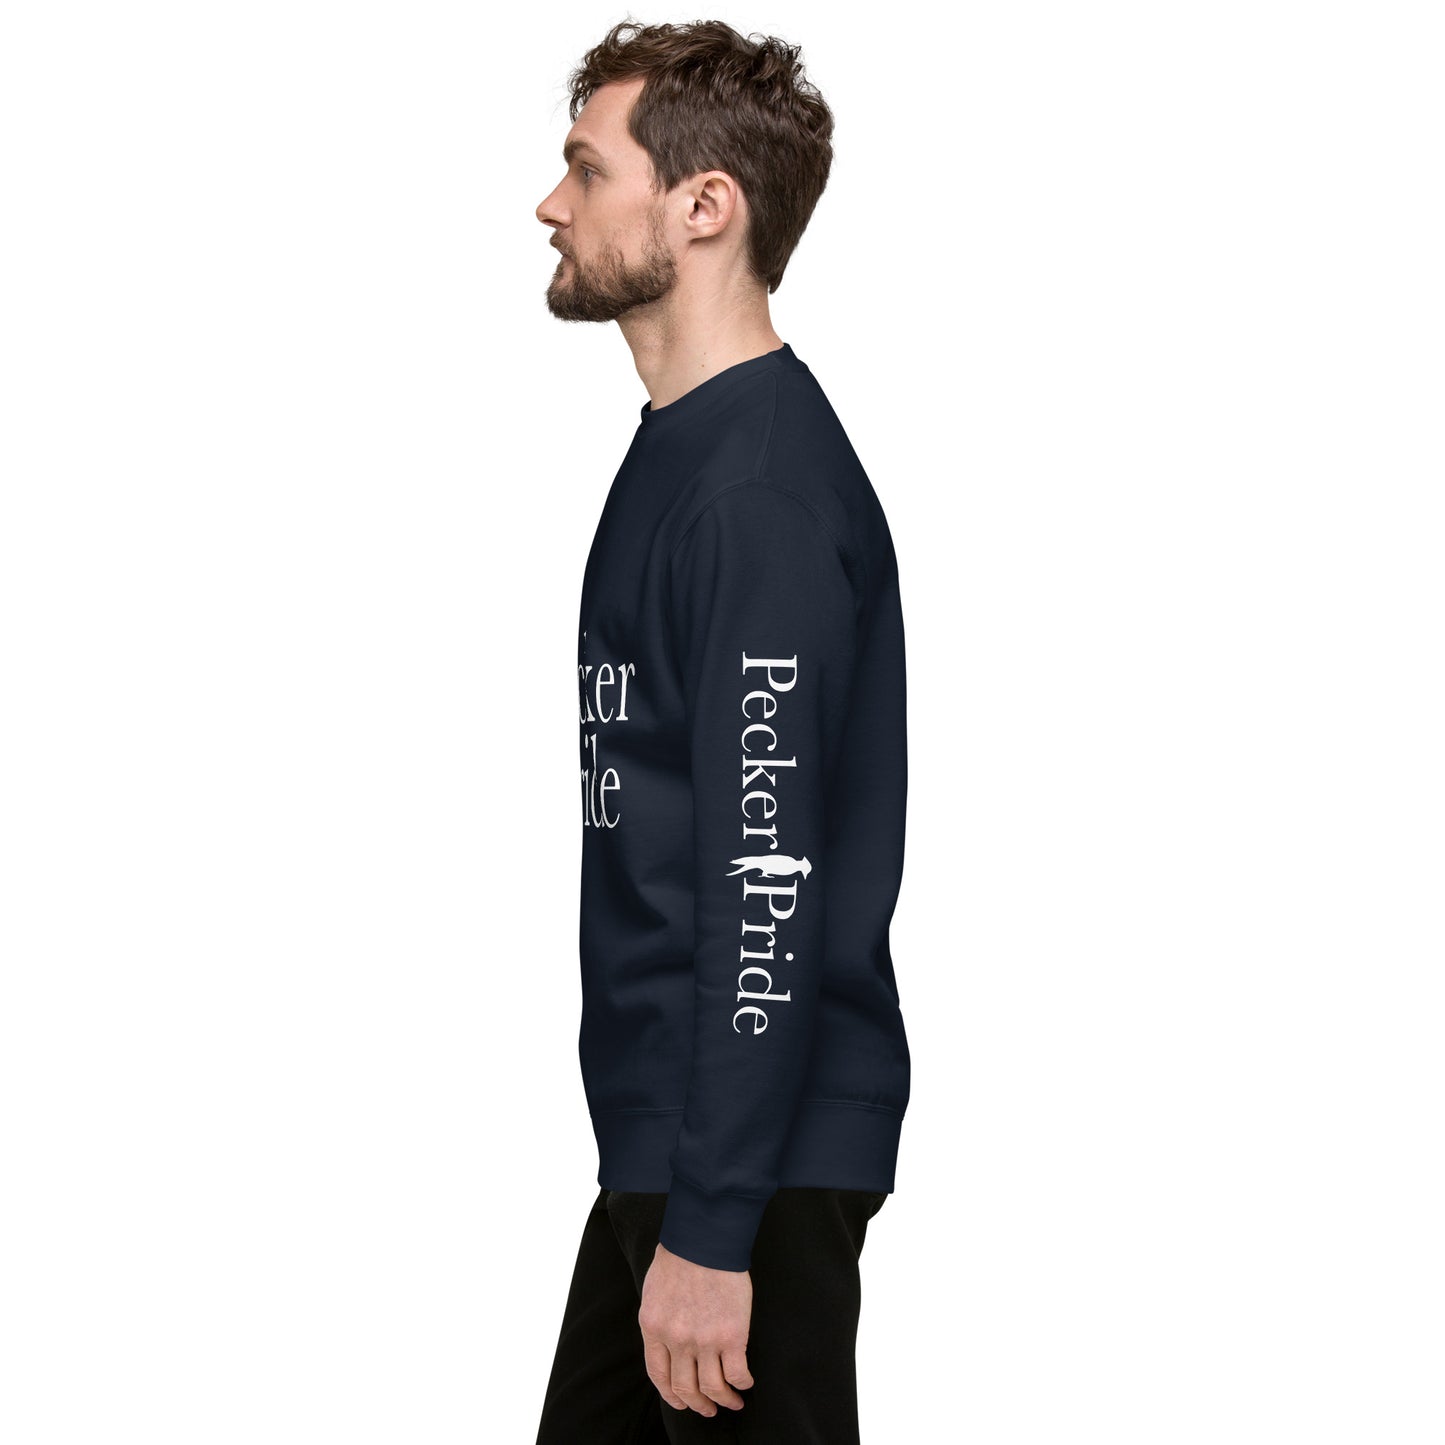 Pecker Pride Dark Unisex Premium Sweatshirt